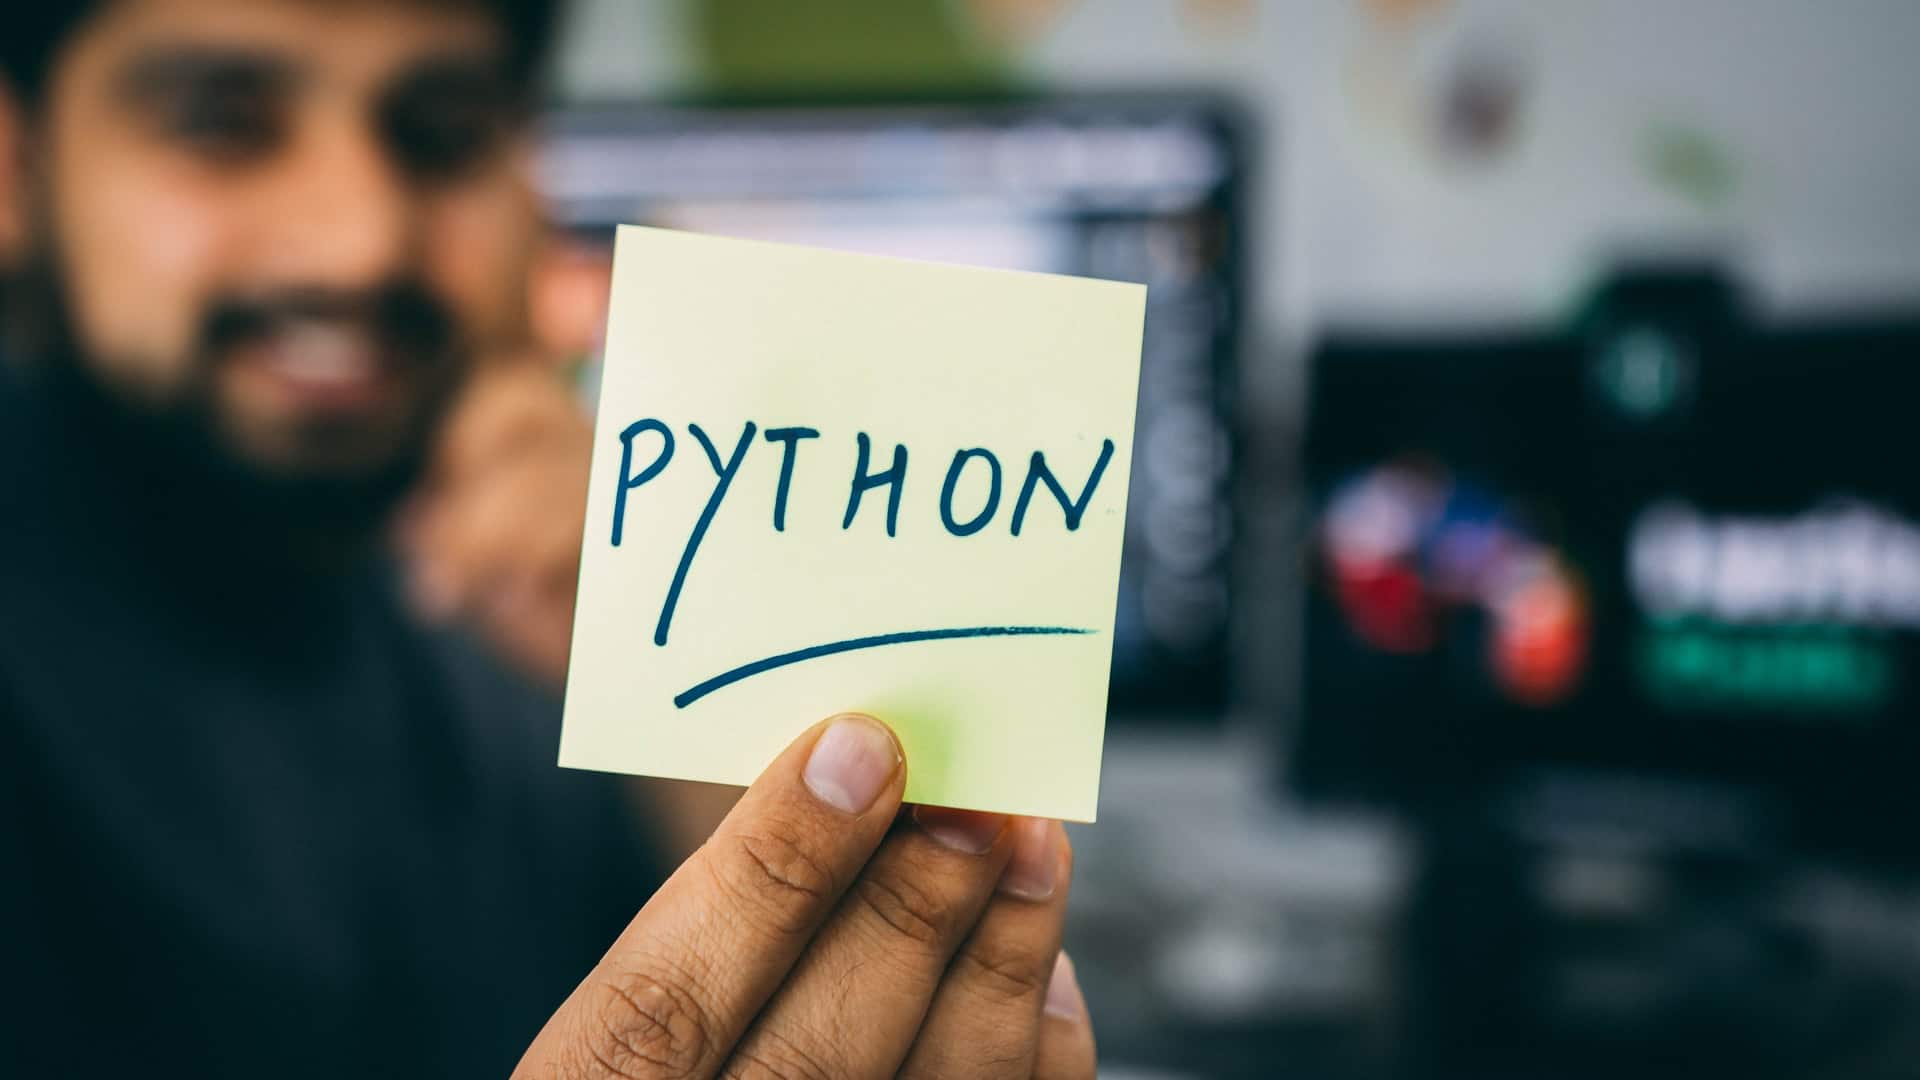 Python tops TIOBE index